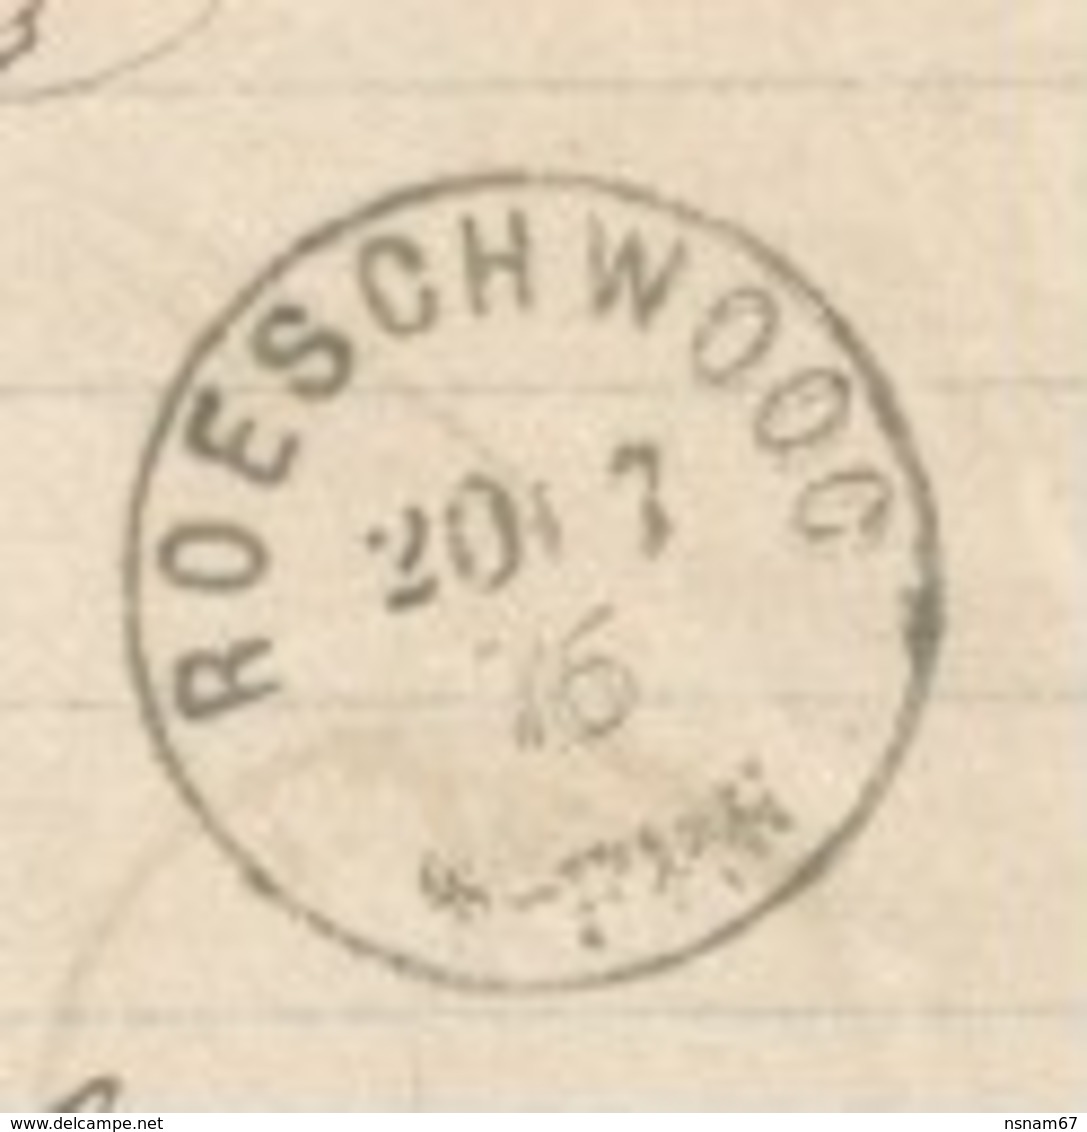 H679 - ROESCHWOOG Pour BISCHWEILER - 1876 - Entête Mairie De FORT LOUIS - - Briefe U. Dokumente